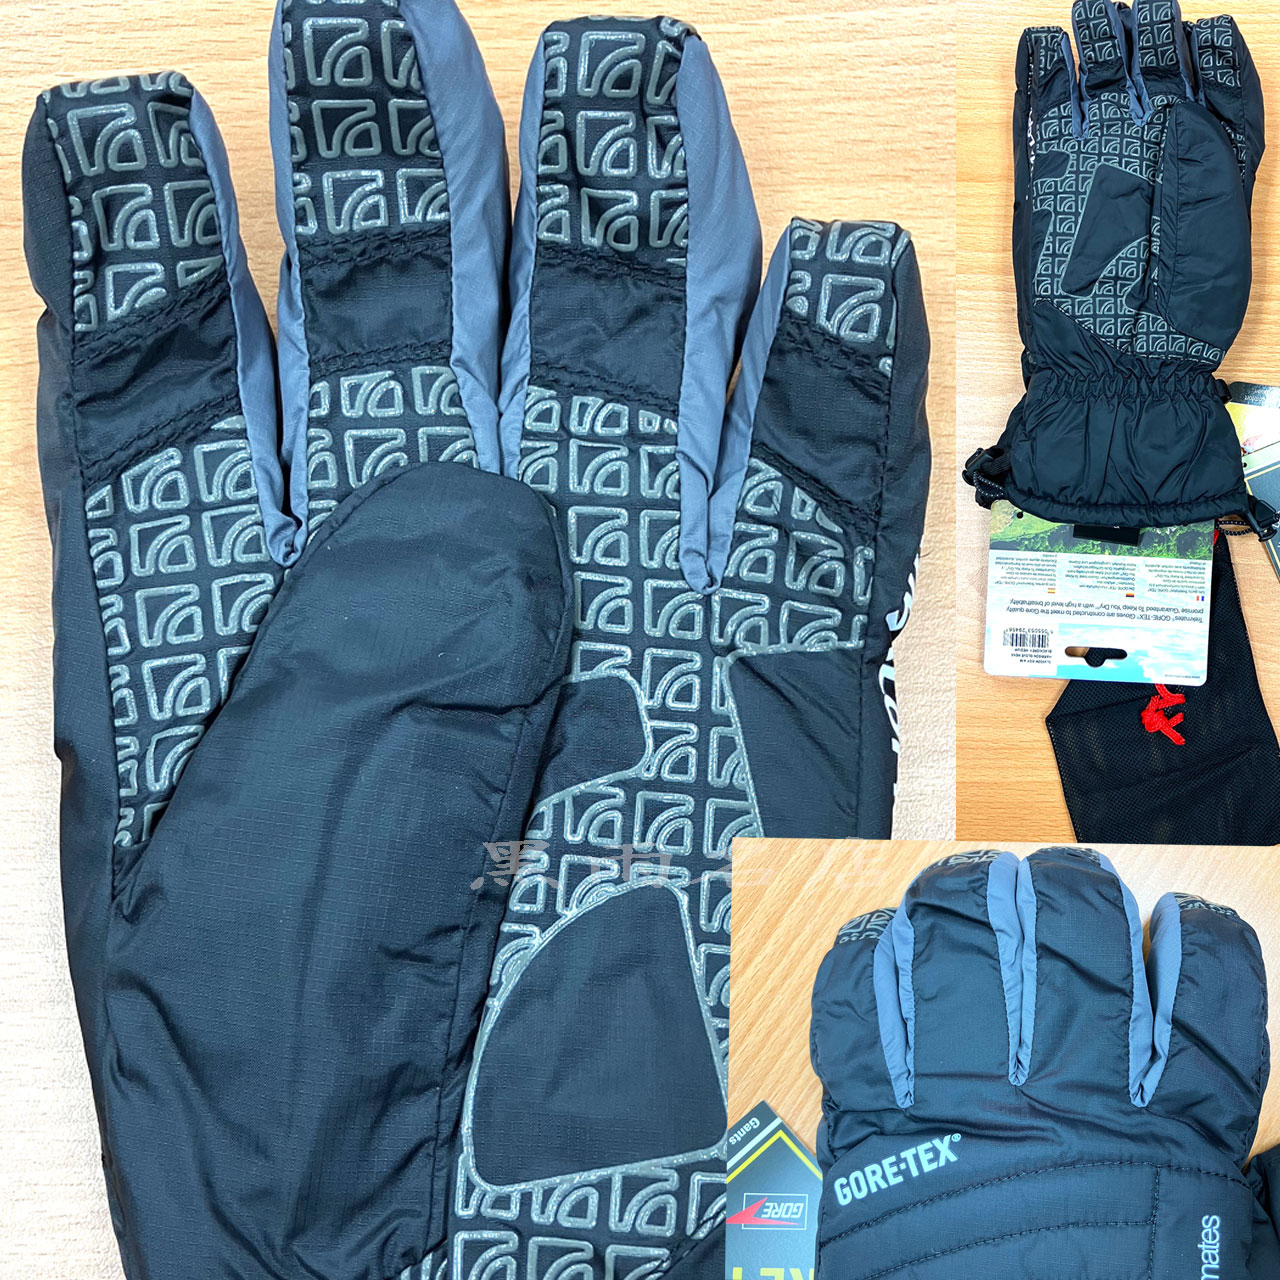 【Trekmates】Gore-tex男Primaloft保暖手套【黑雨名店】機能手套機能型防護手套機車保暖防水手套GLV002M(黑/灰)